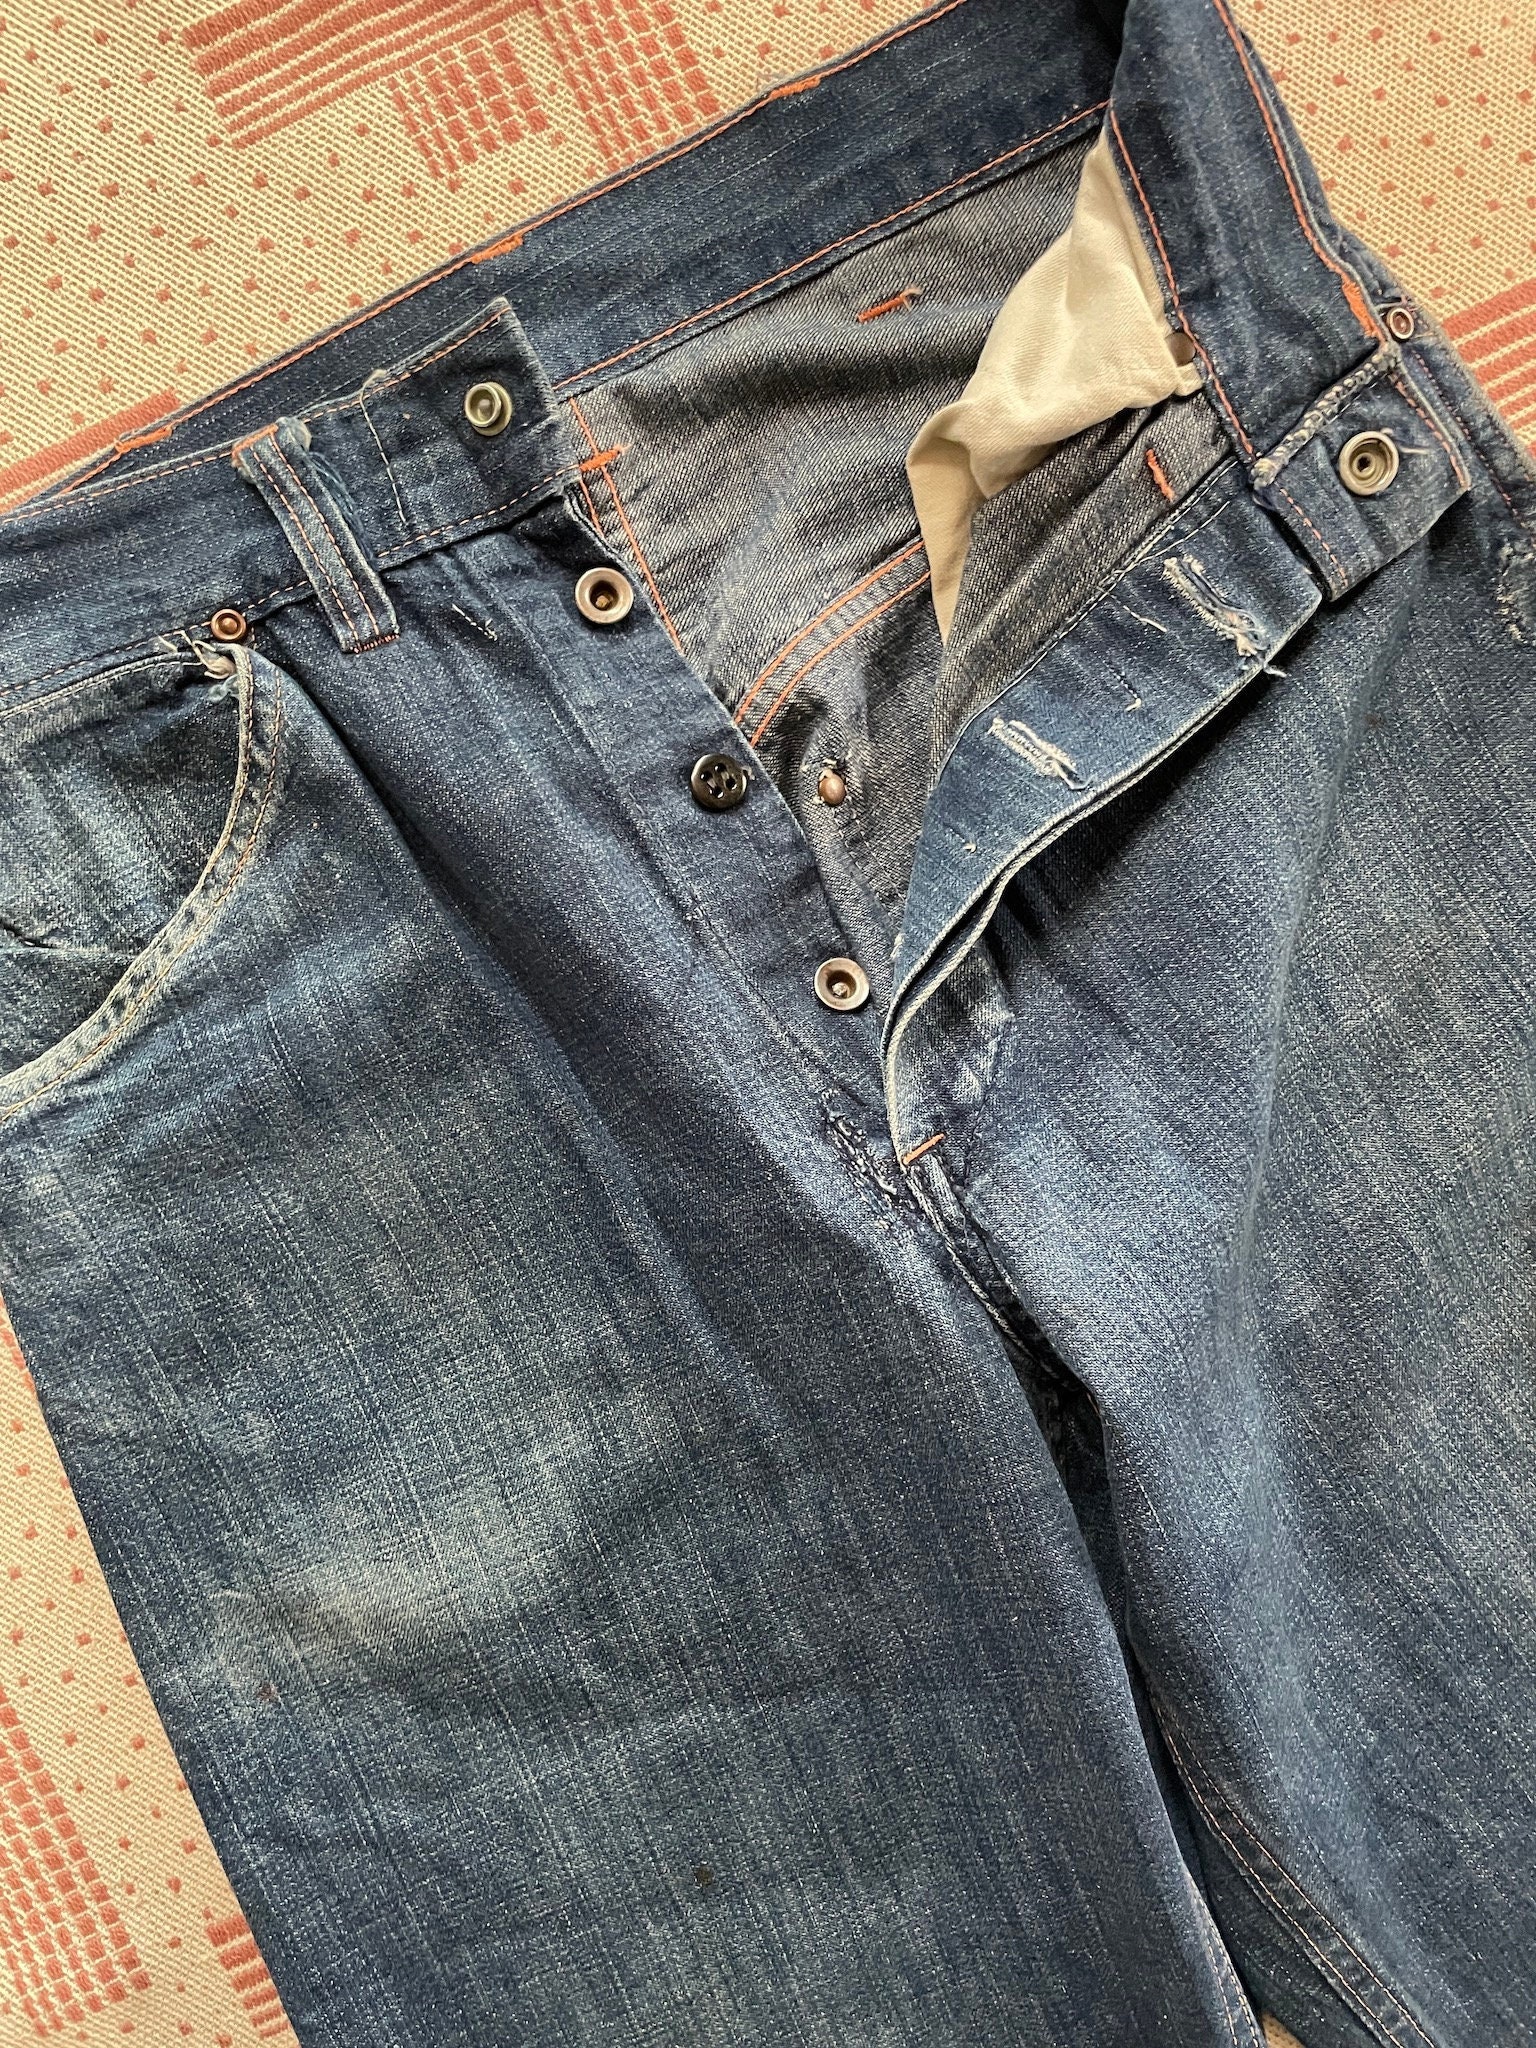 Kleding Gender-neutrale kleding volwassenen Jeans Vintage 40s 50s Key Imperial Carpenter Work Jeans hidden selvedge denim size 32 waist 